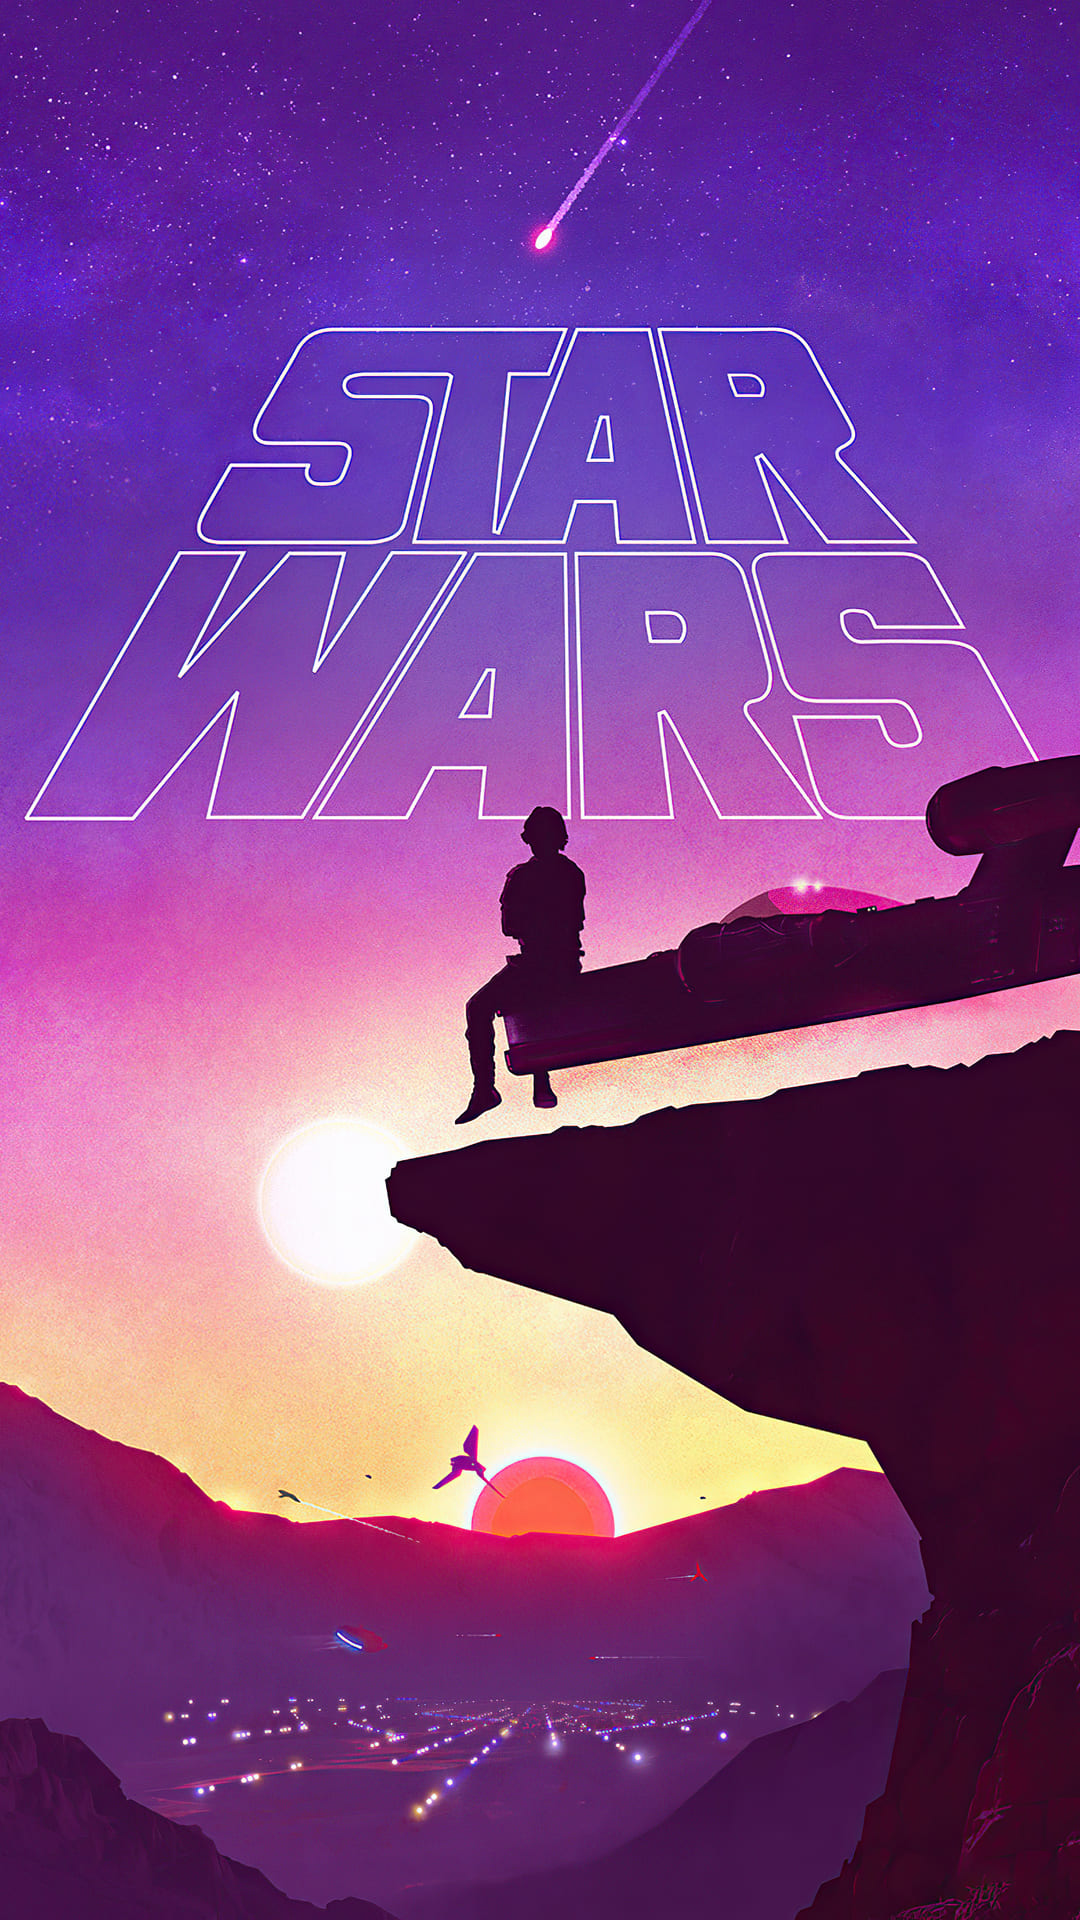 Star Wars Wallpaper- Top20 Free Best Star Wars Wallpaper Background Download